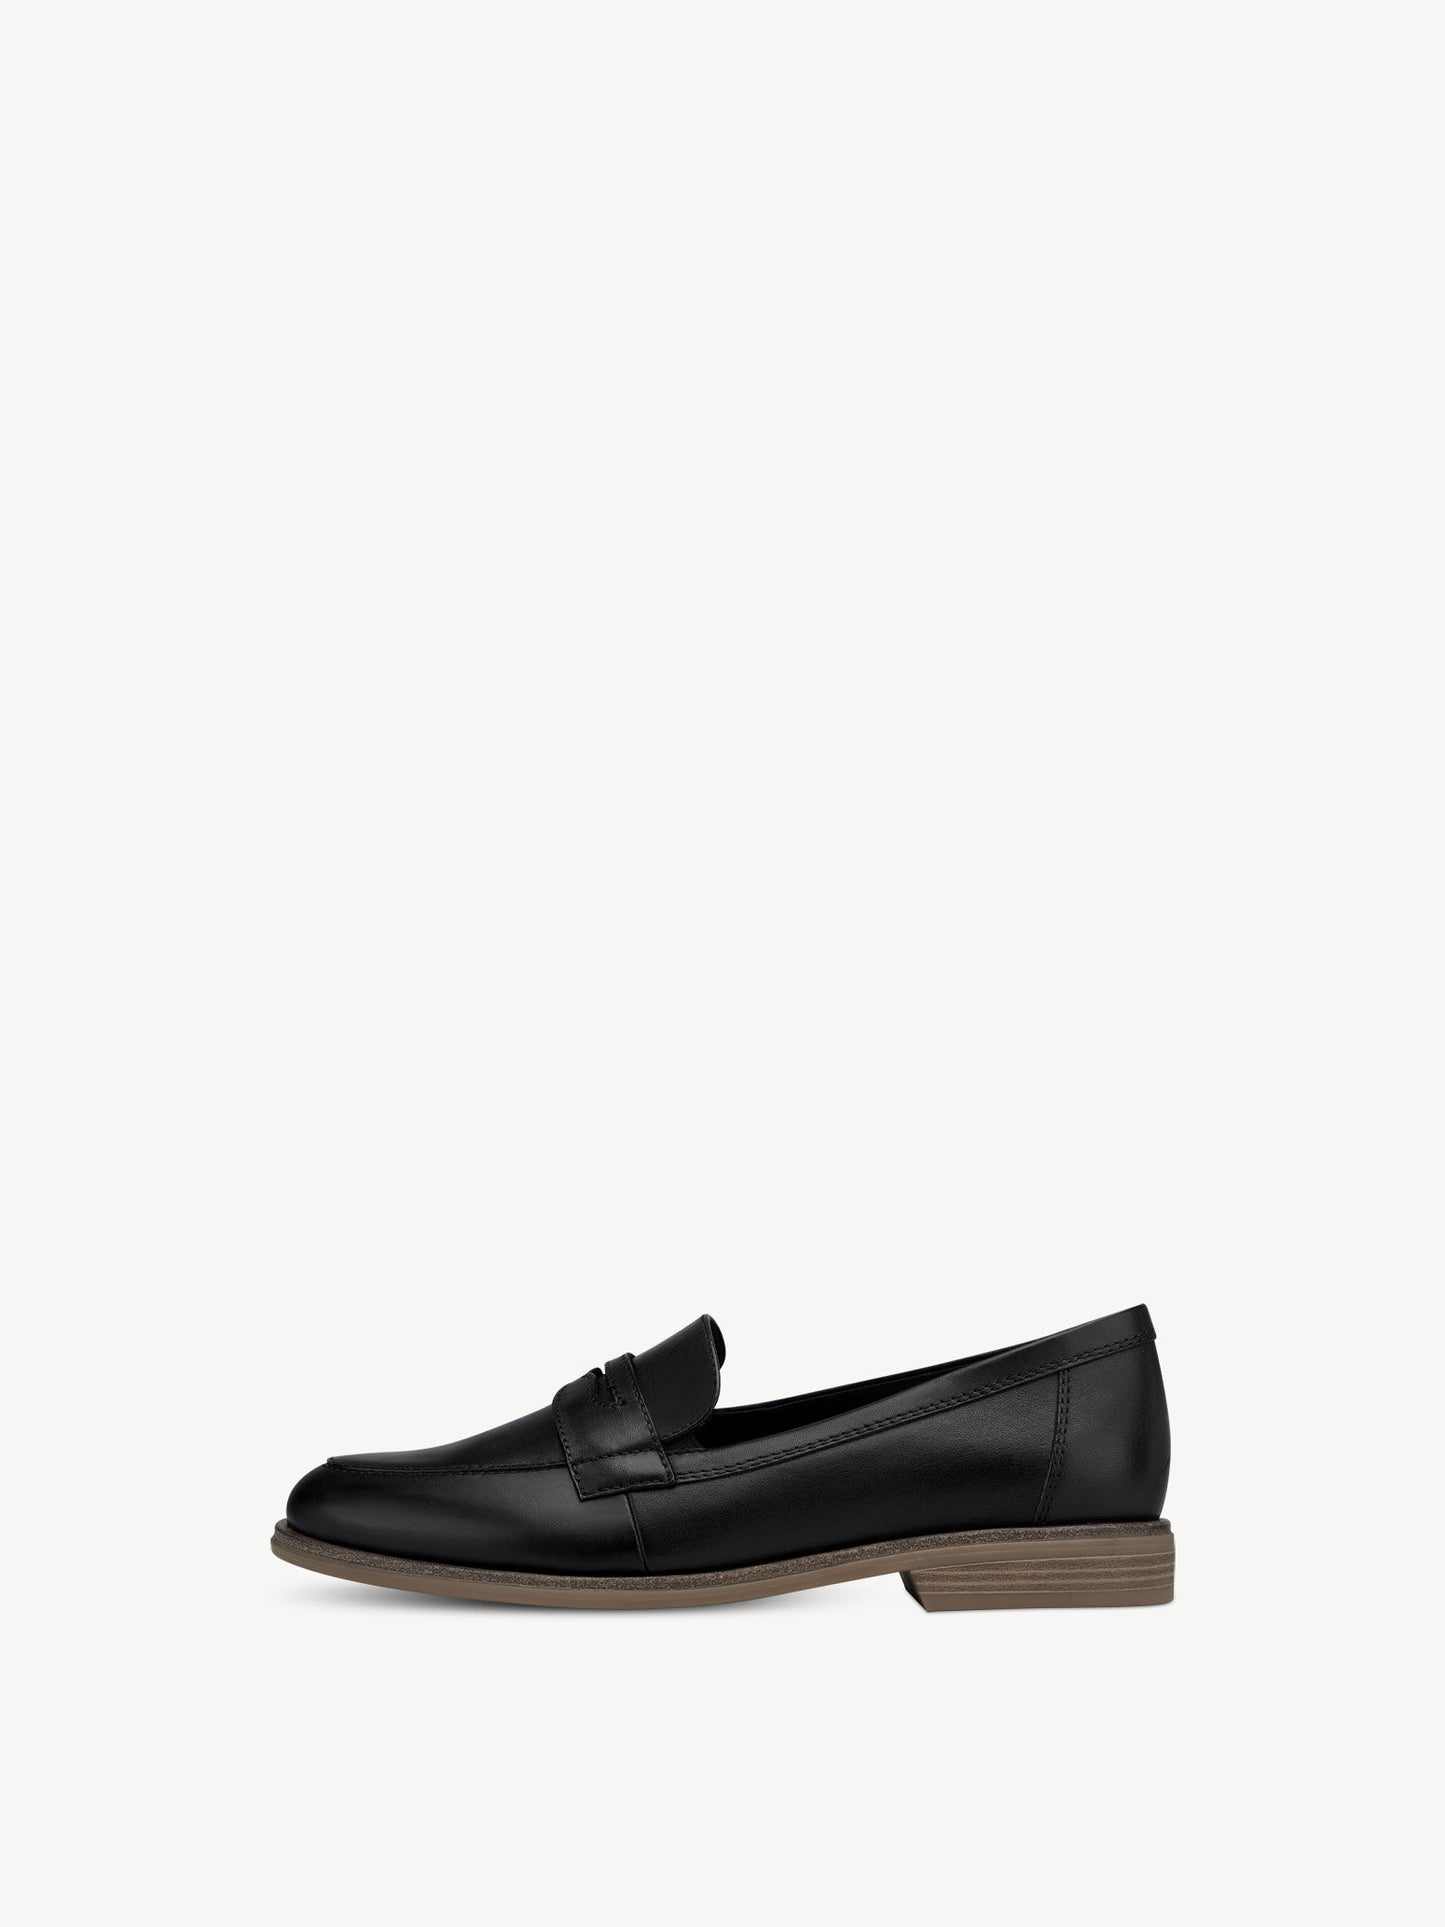 Tamaris Women's 1-1-24215-20 003 Leather Slipper Loafer Shoes Black